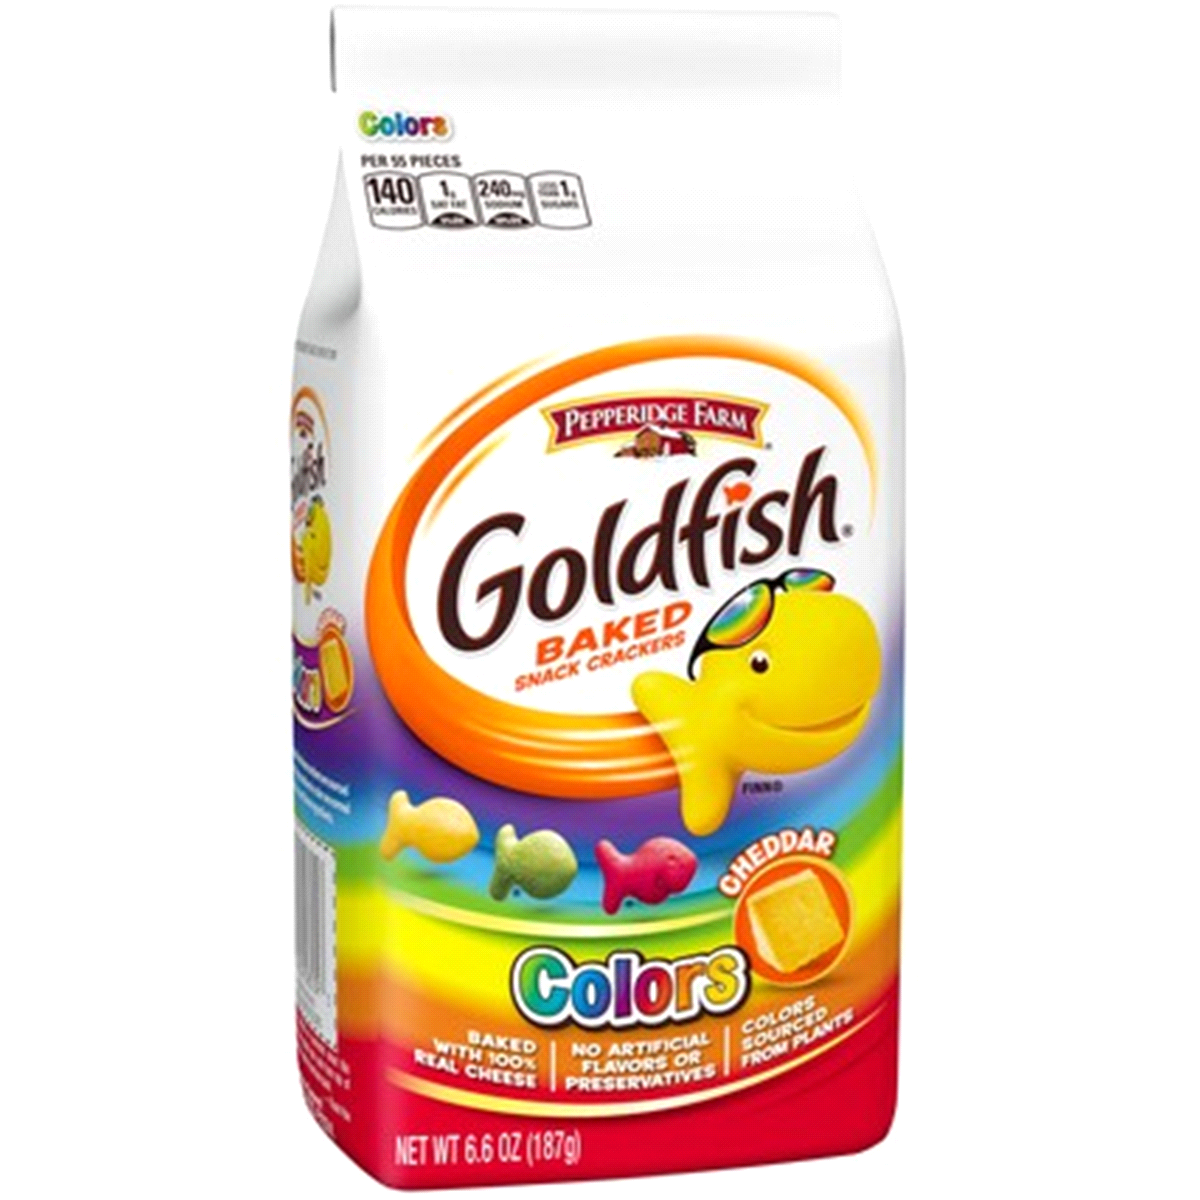 slide 168 of 195, Pepperidge Farm Goldfish Colors Cheddar Cheese Crackers, 6.6 oz Bag, 6.6 oz